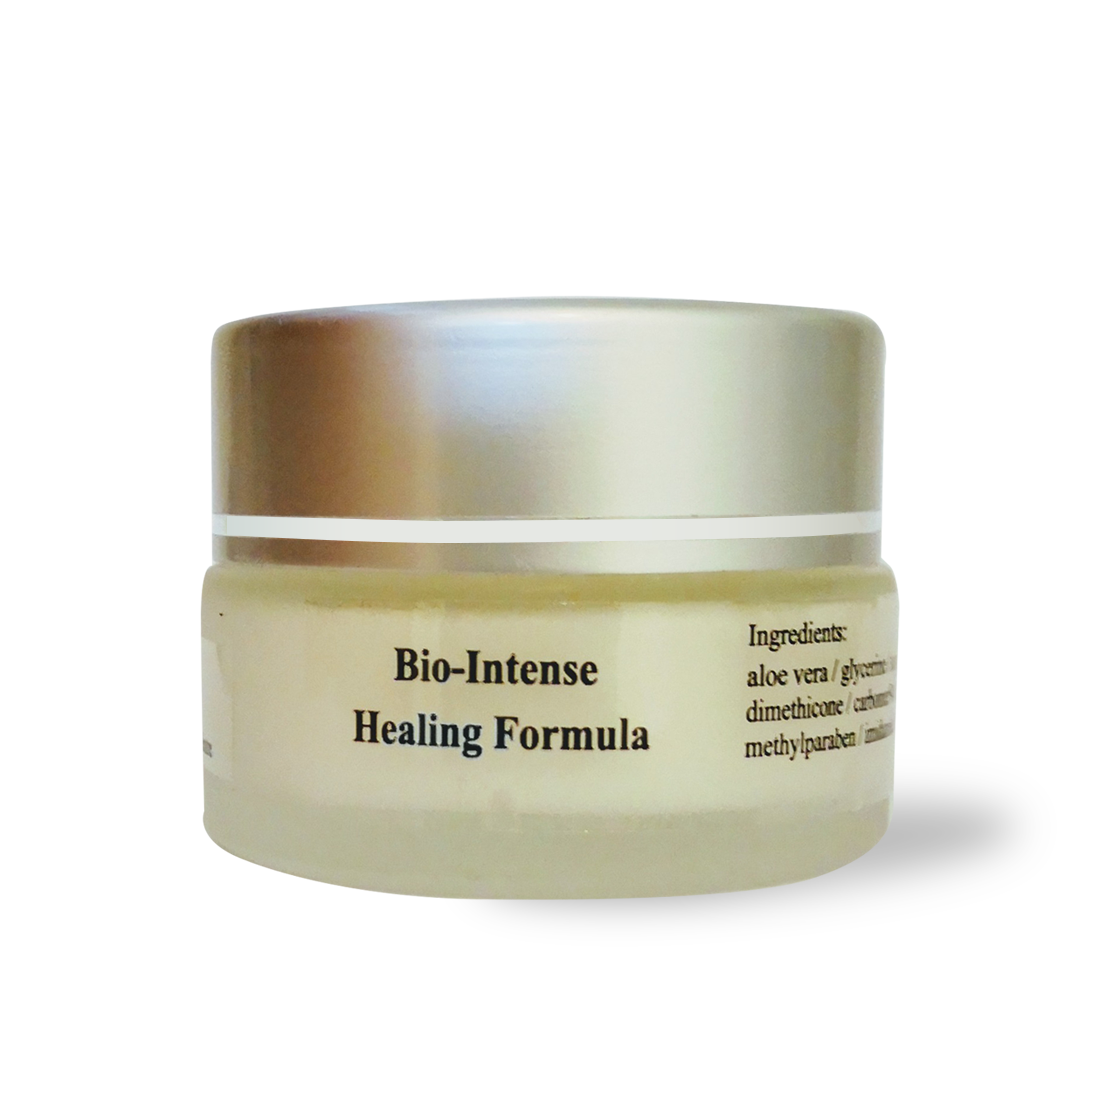 Bio-Intense Healing Formula - Dermacare Therapeutic Skincare